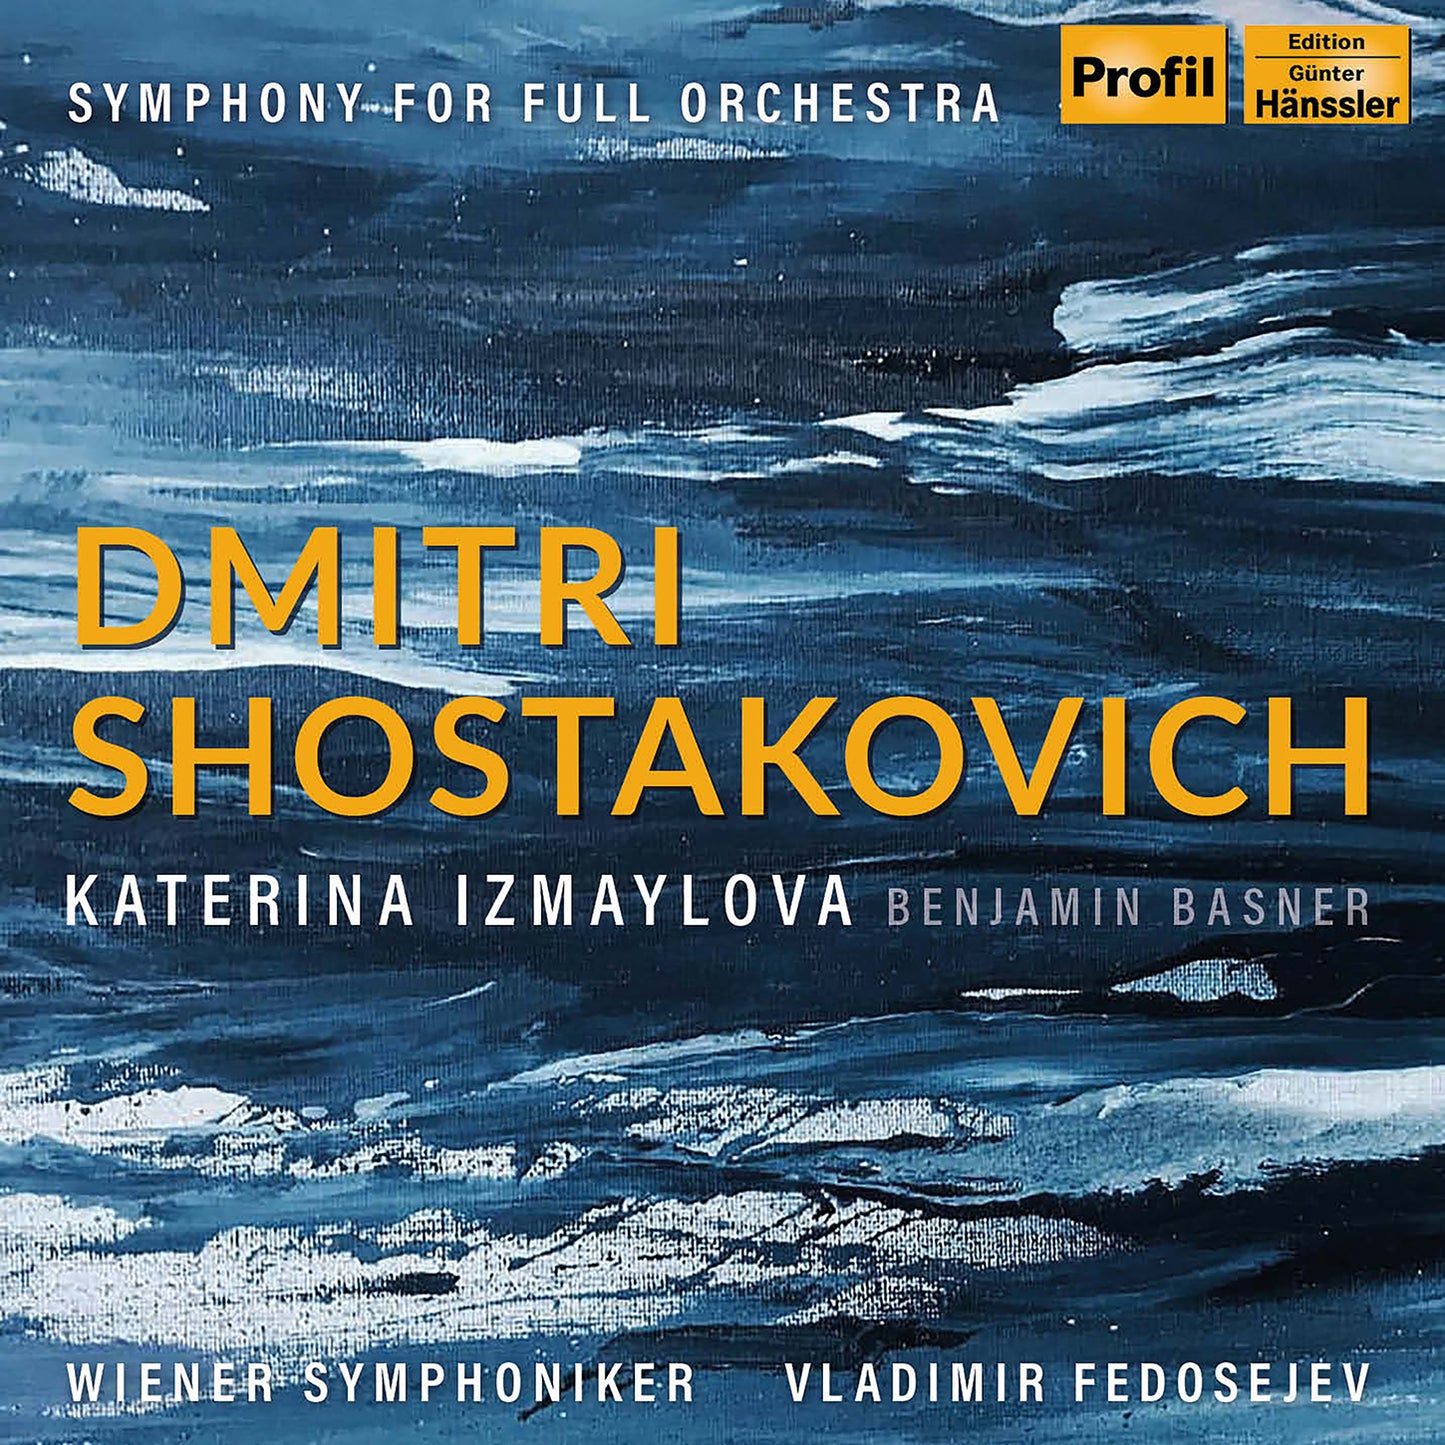 Shostakovich: Katerina Izmaylova - Live Recording of the Eur